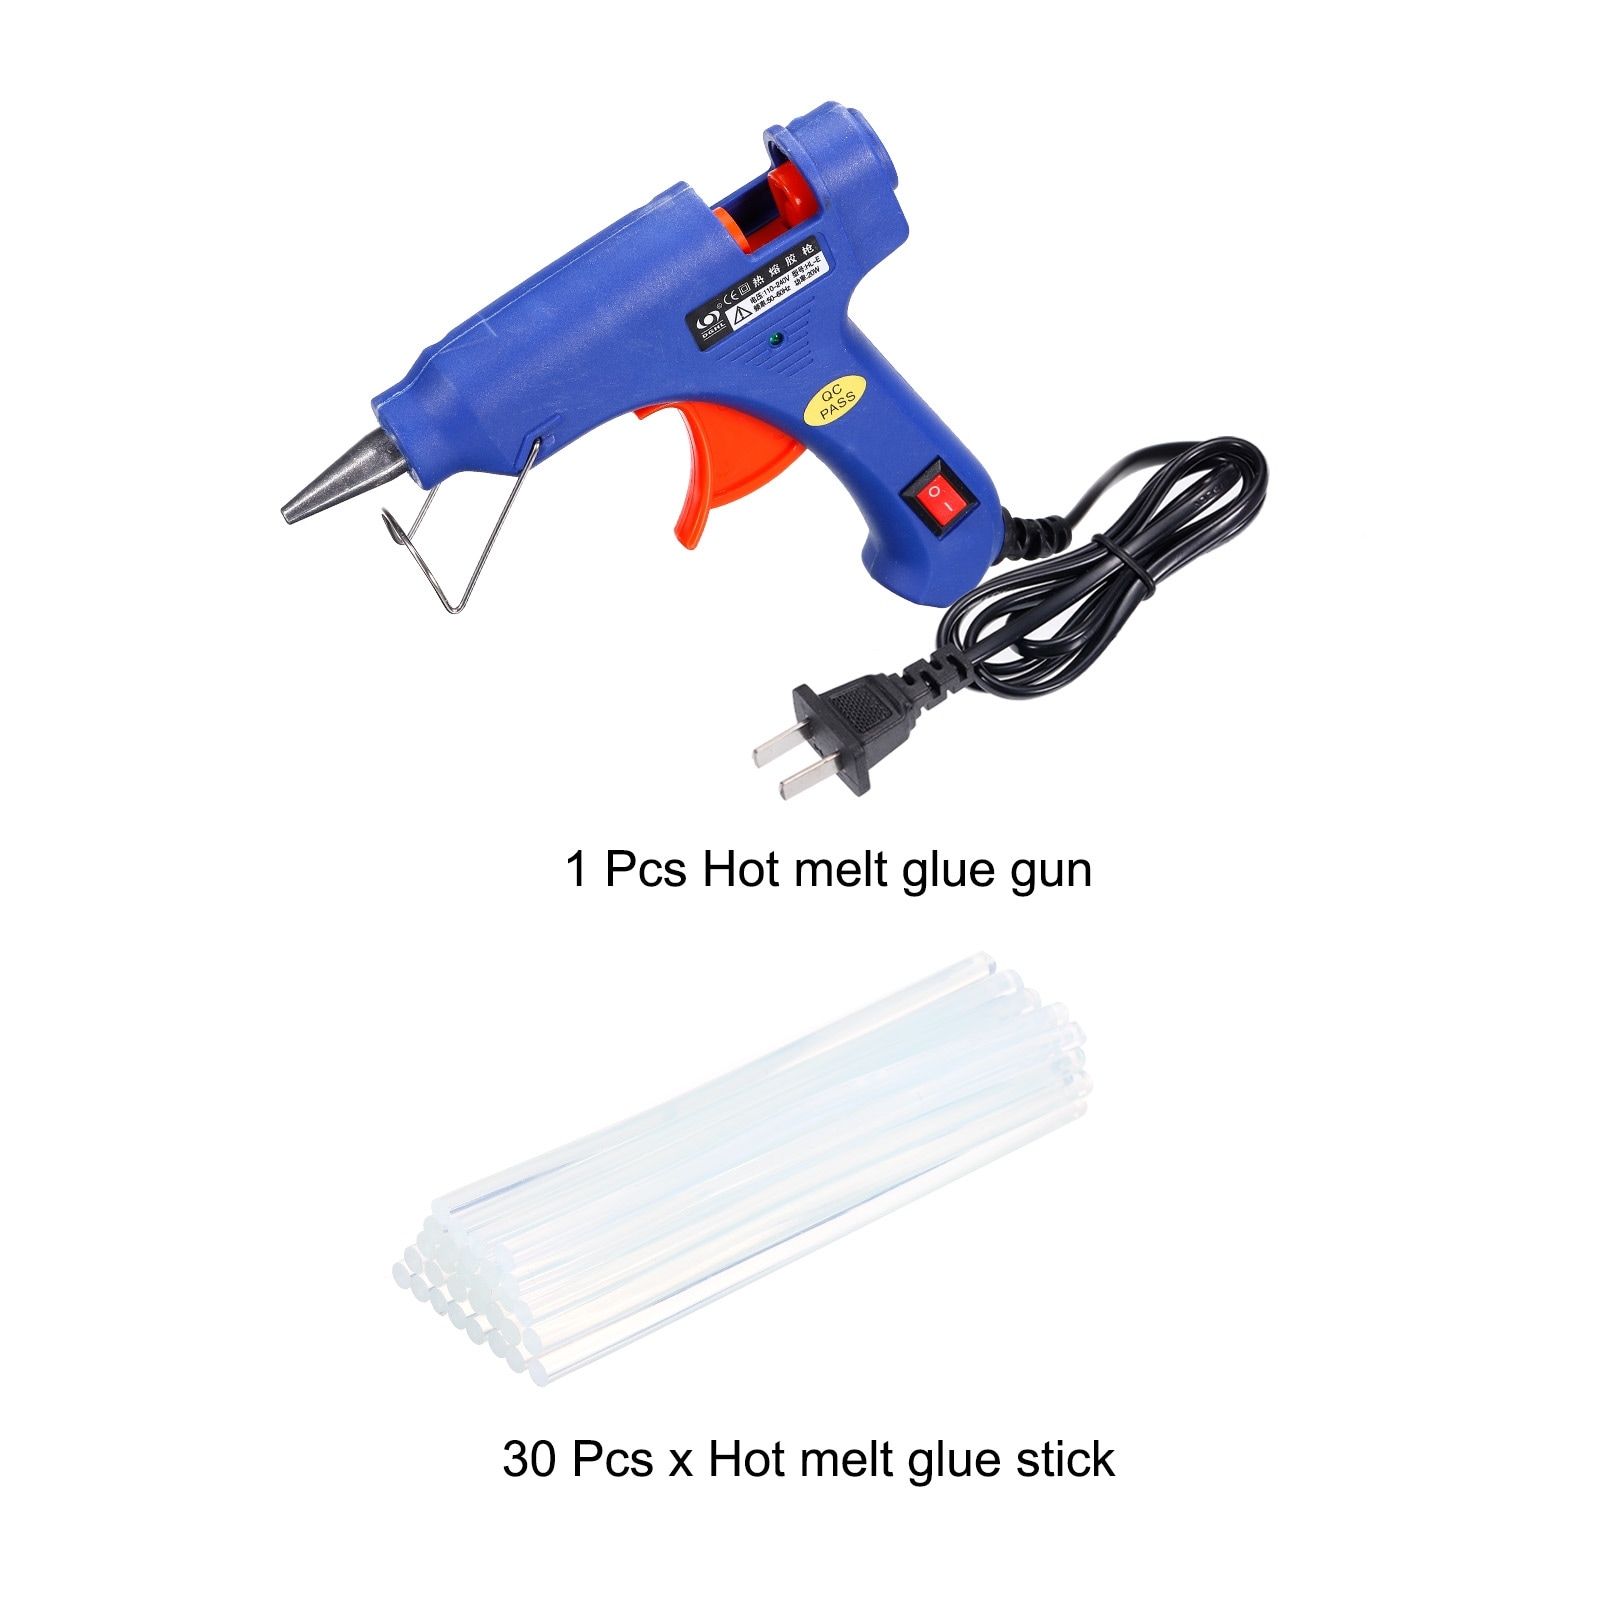 Do It 40 Watt Heavy Duty Hot Glue gun with 2 Glue Sticks